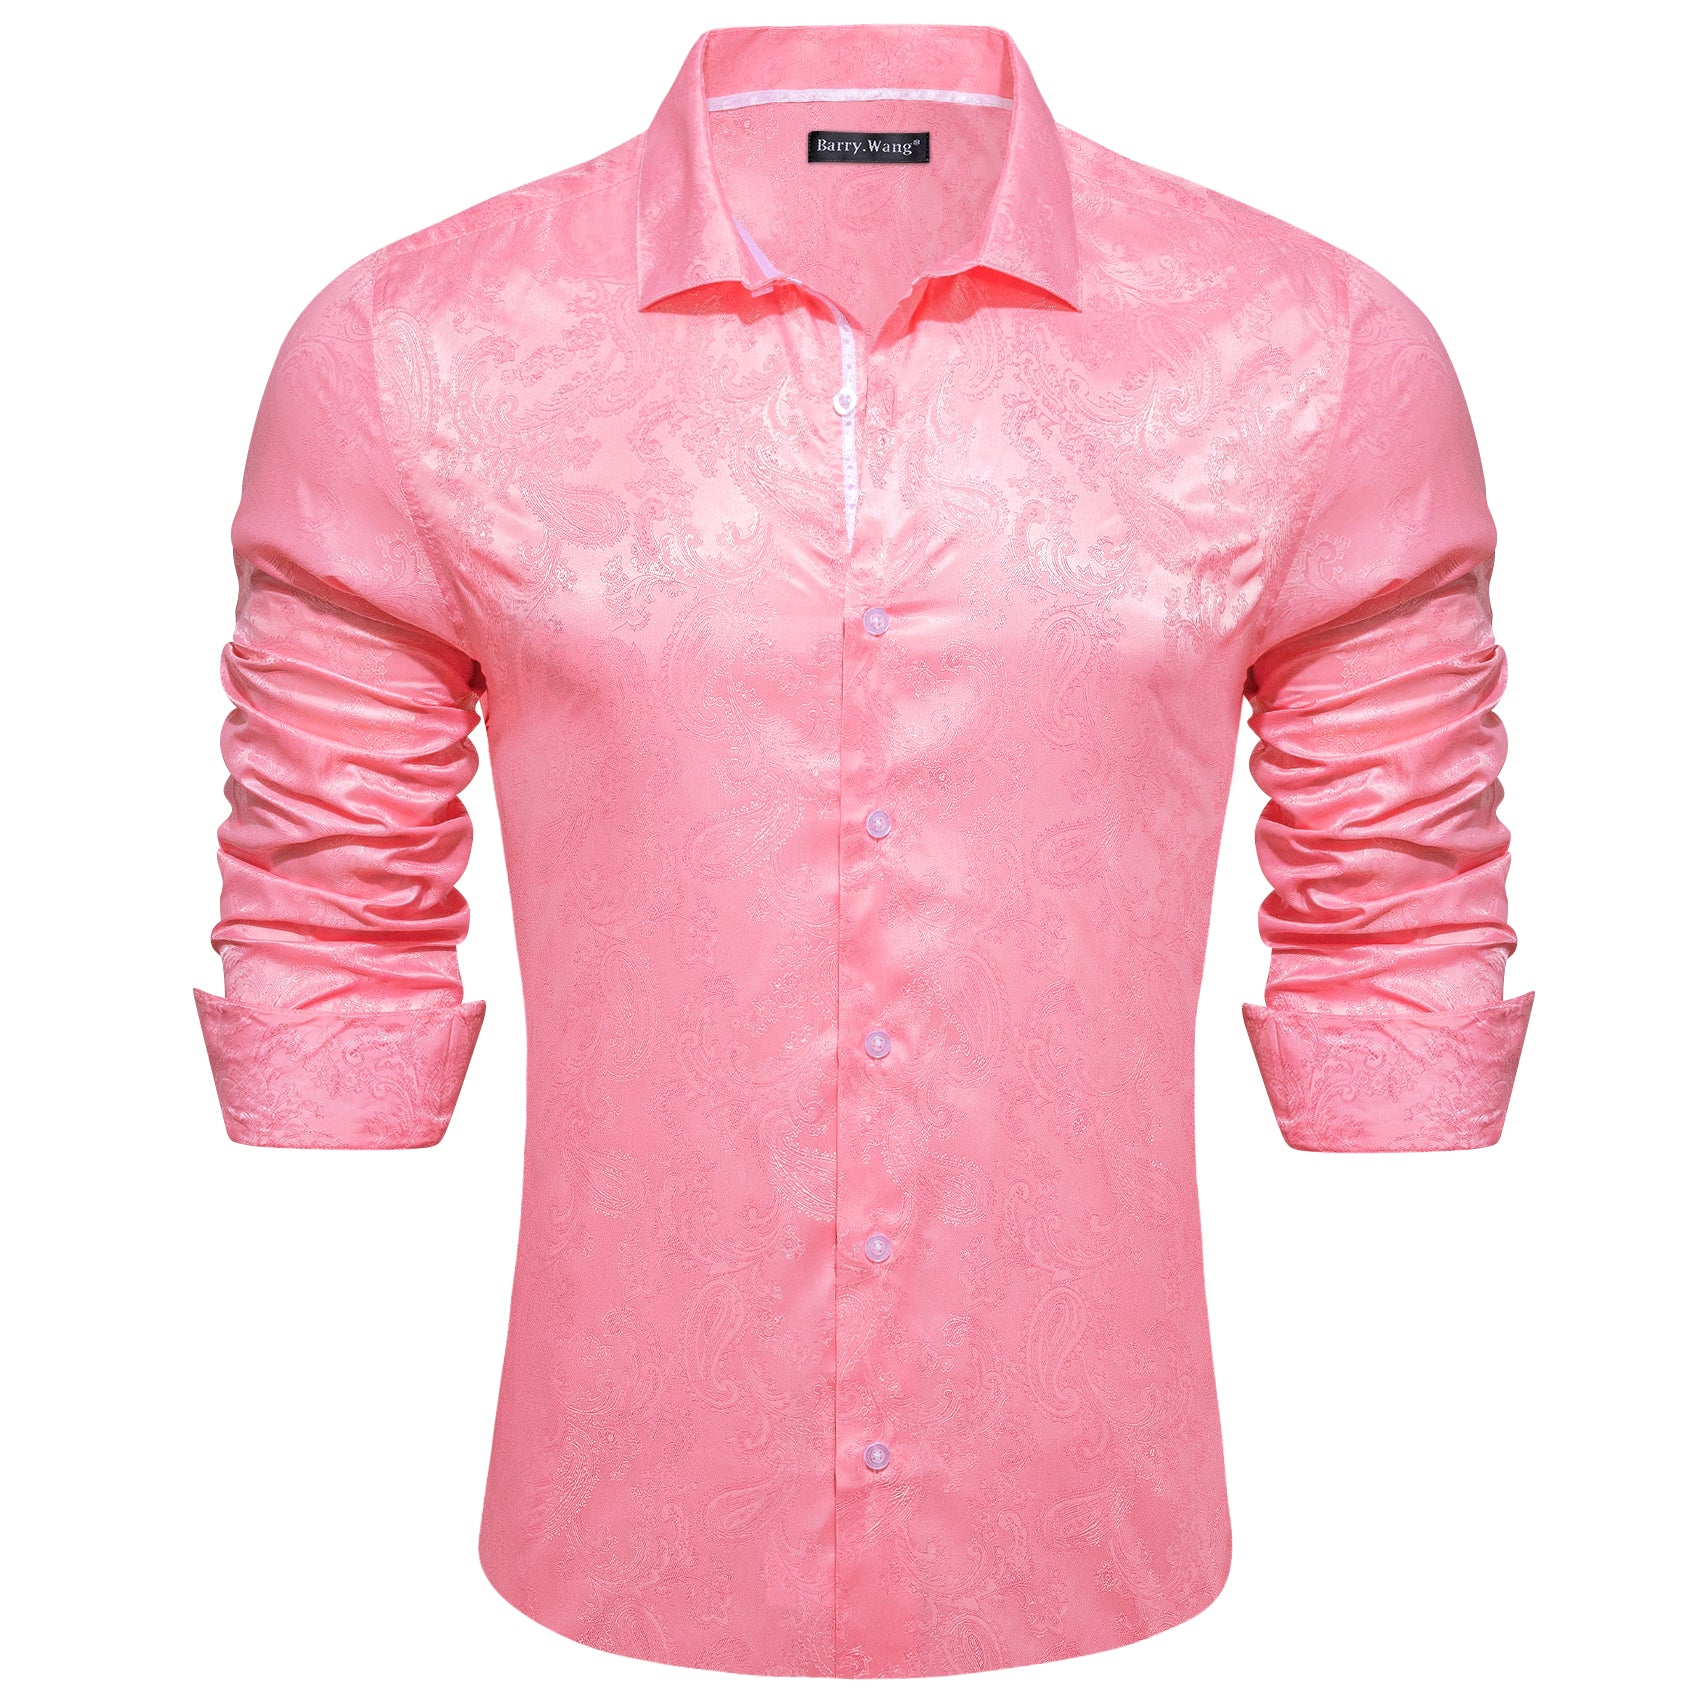 Barry.wang Button Down Shirt Men's Pink Paisley Silk Long Sleeve Shirt